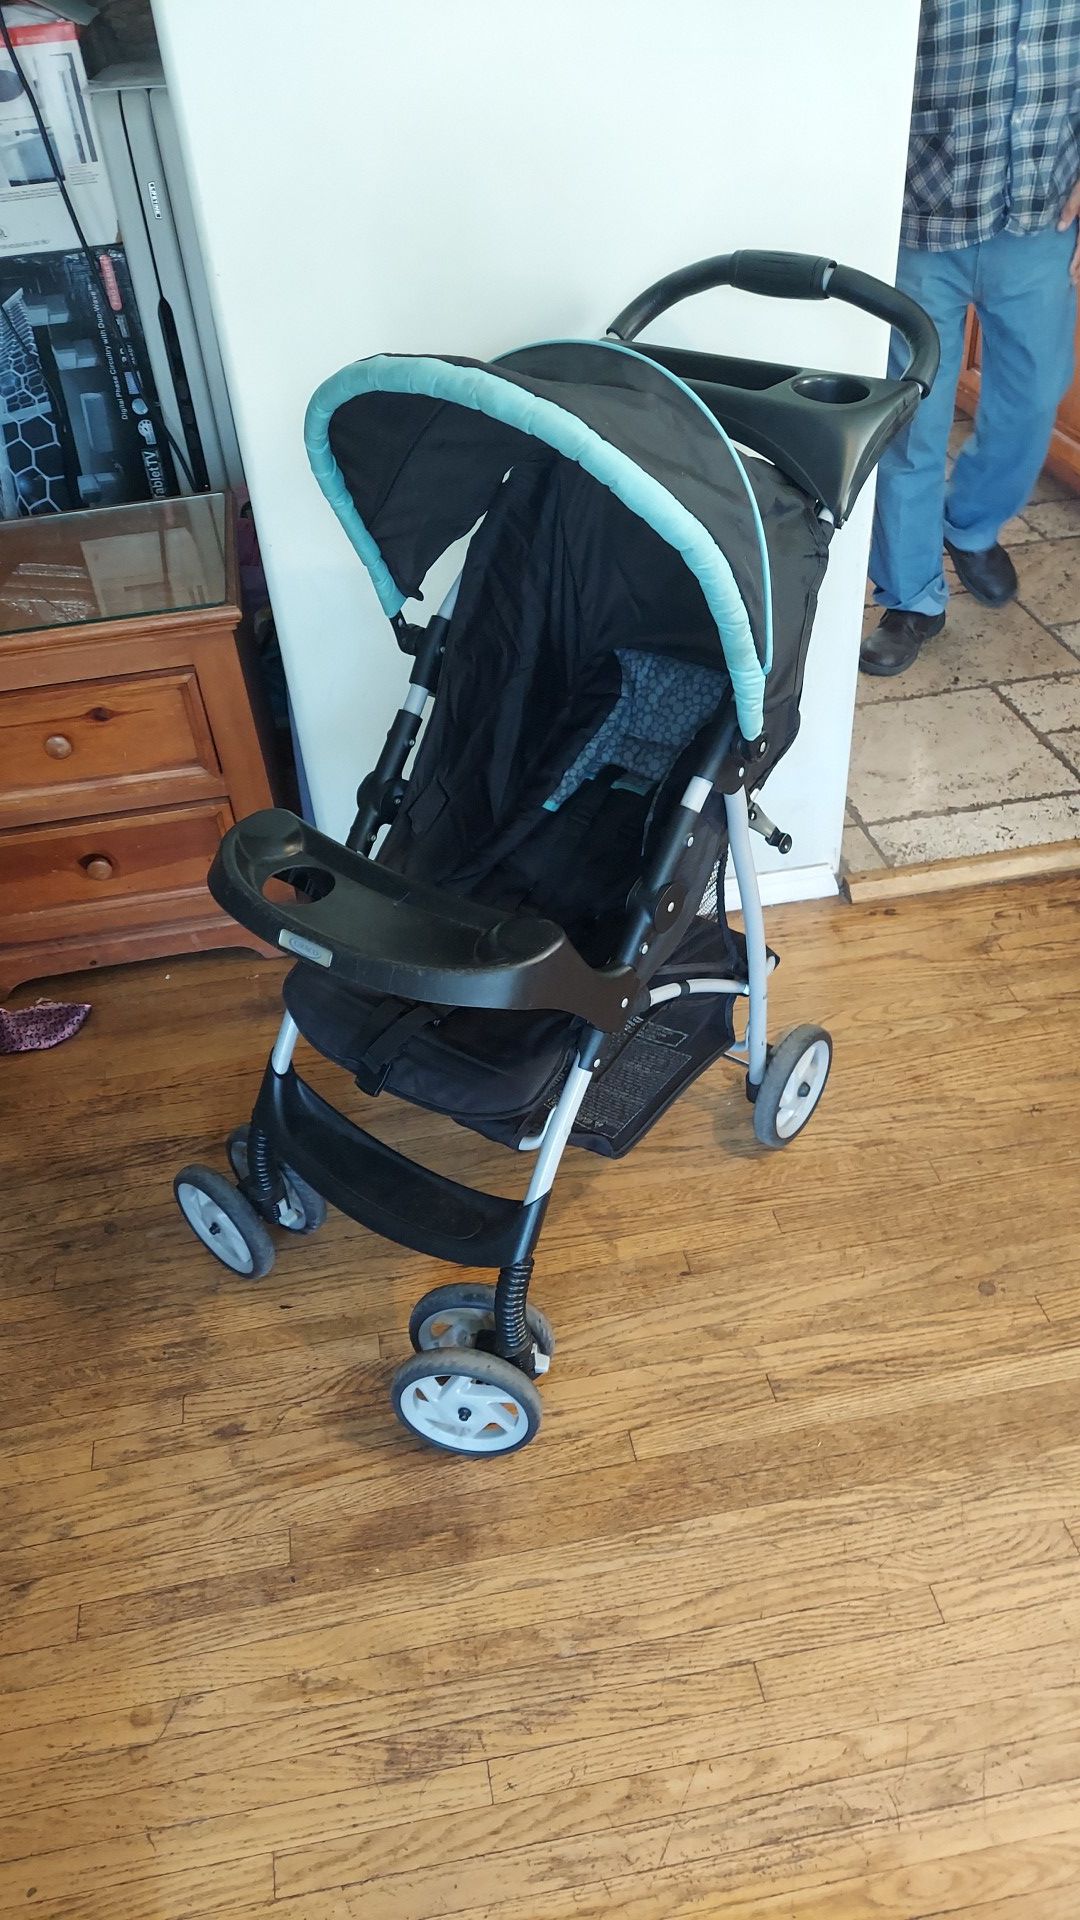 Graco Baby stroller